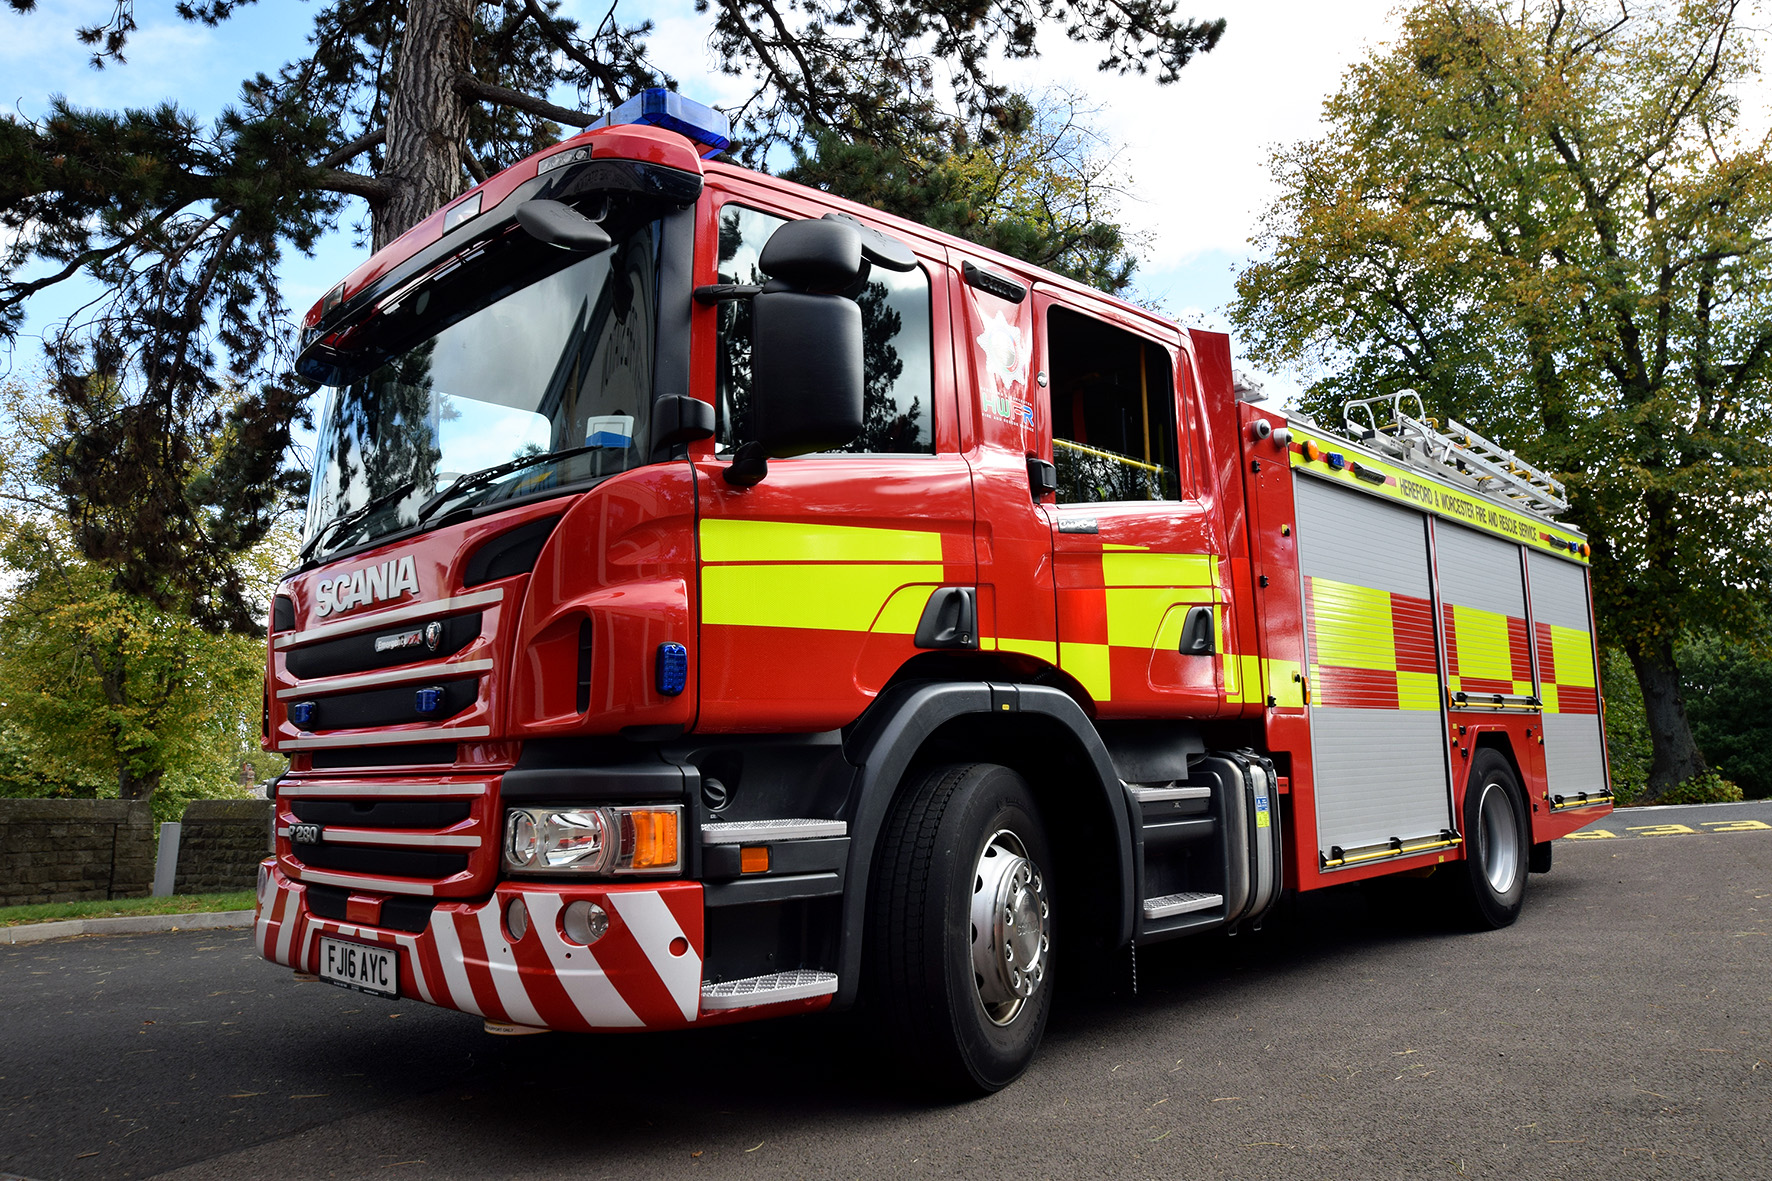 NEWS | Fire crews called to crash at Whitestone